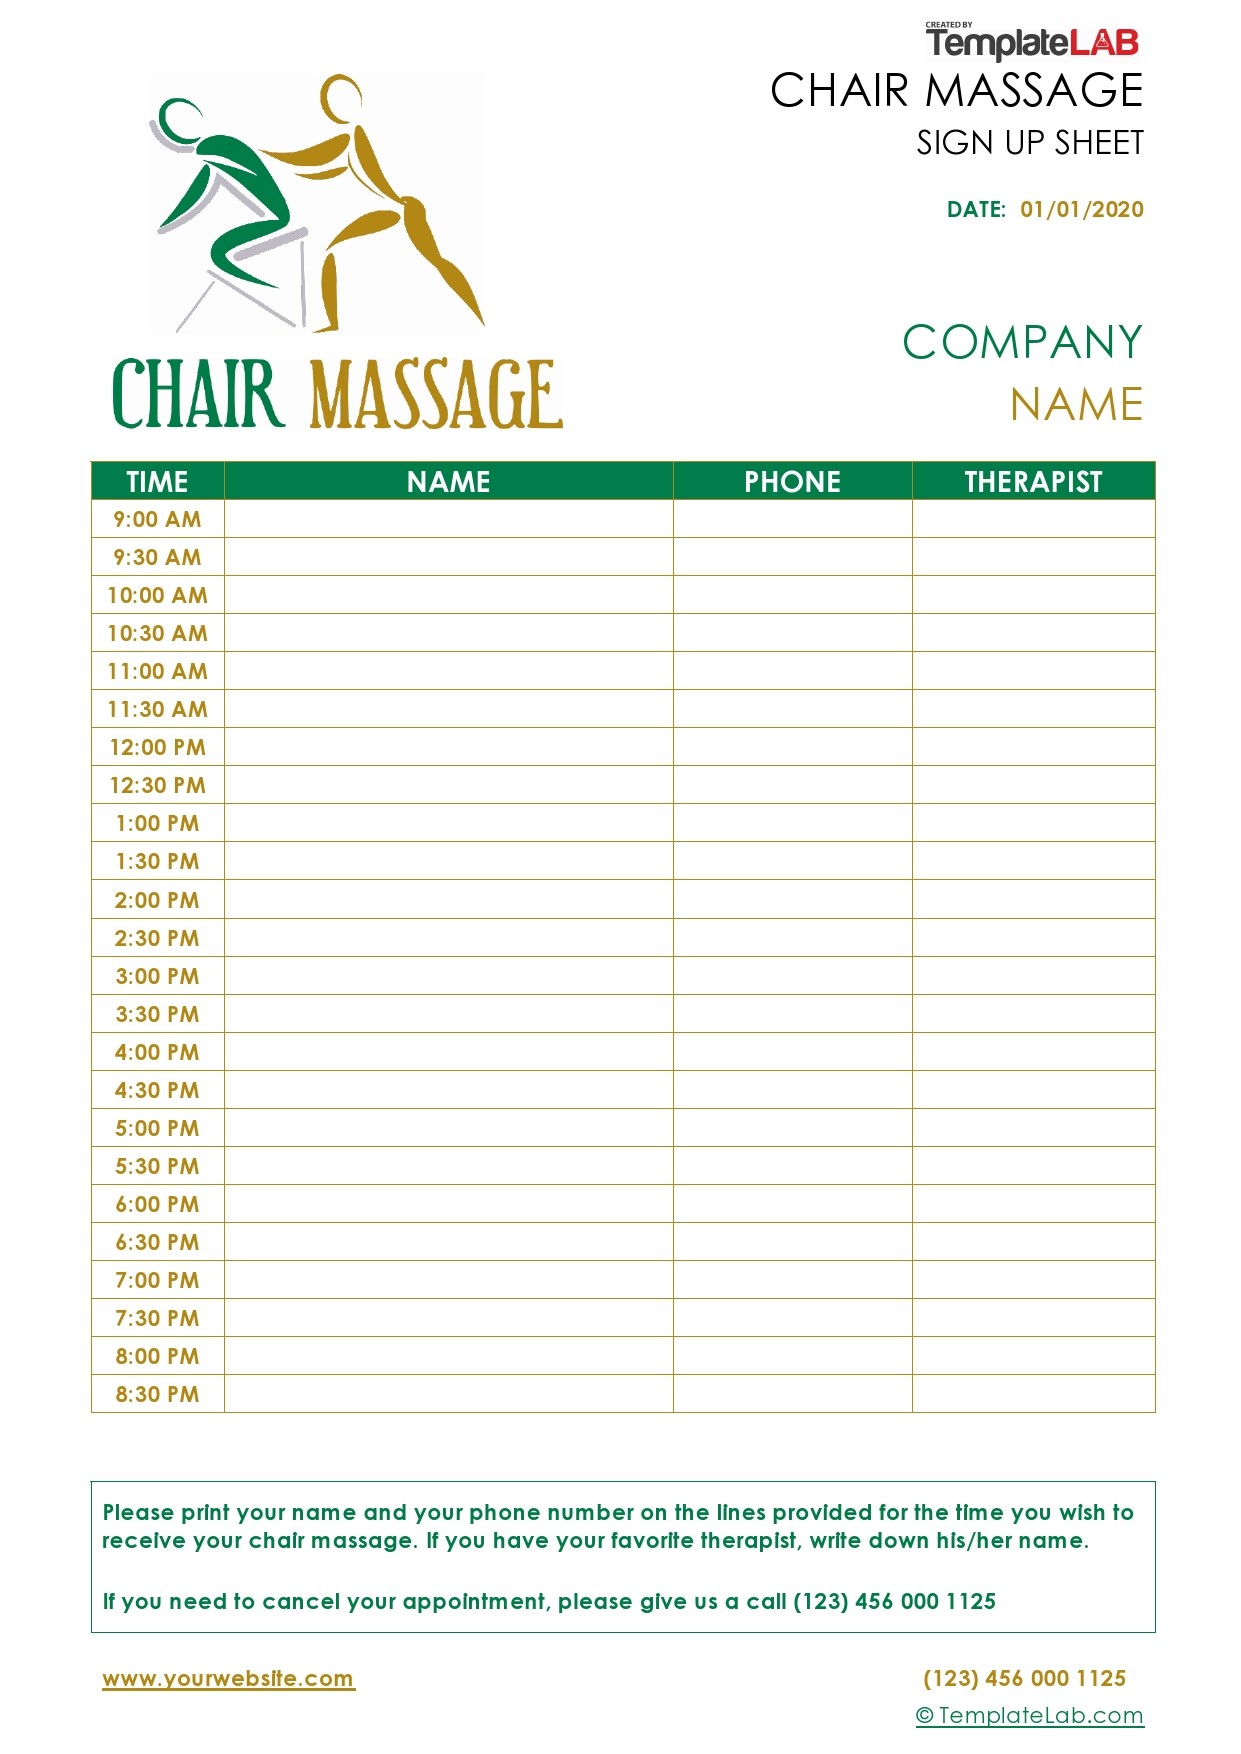 Free Chair Massage Sign Up Sheet